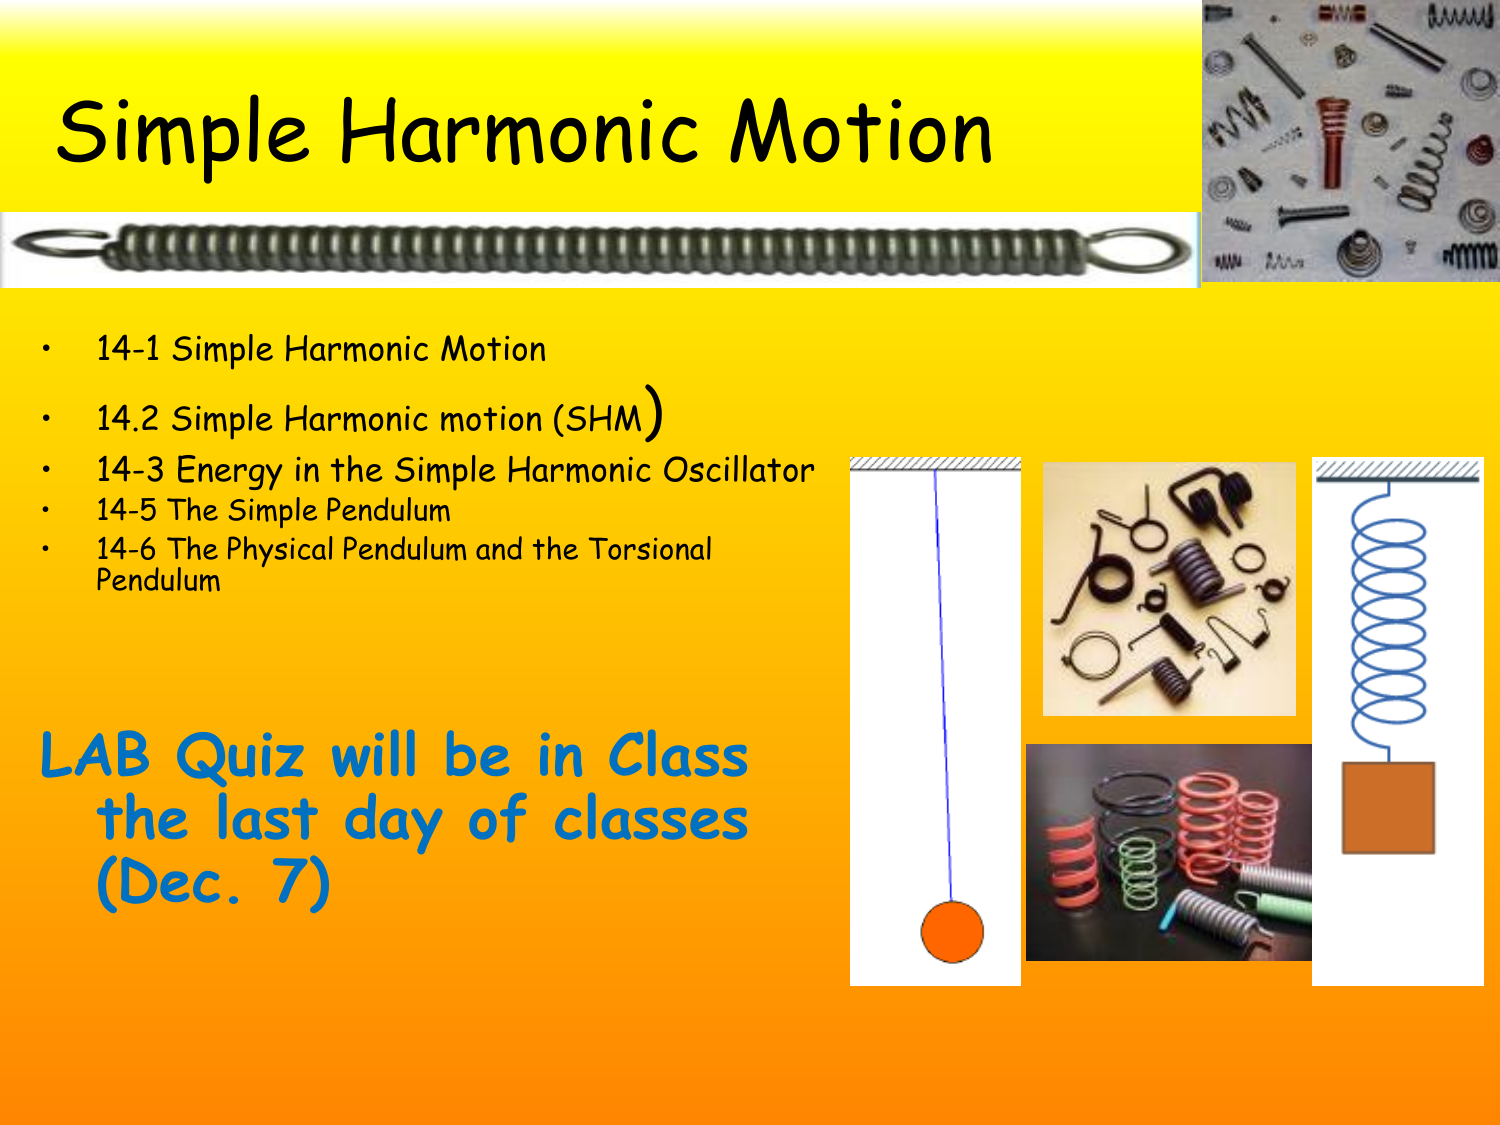 simple harmonic motion comic example